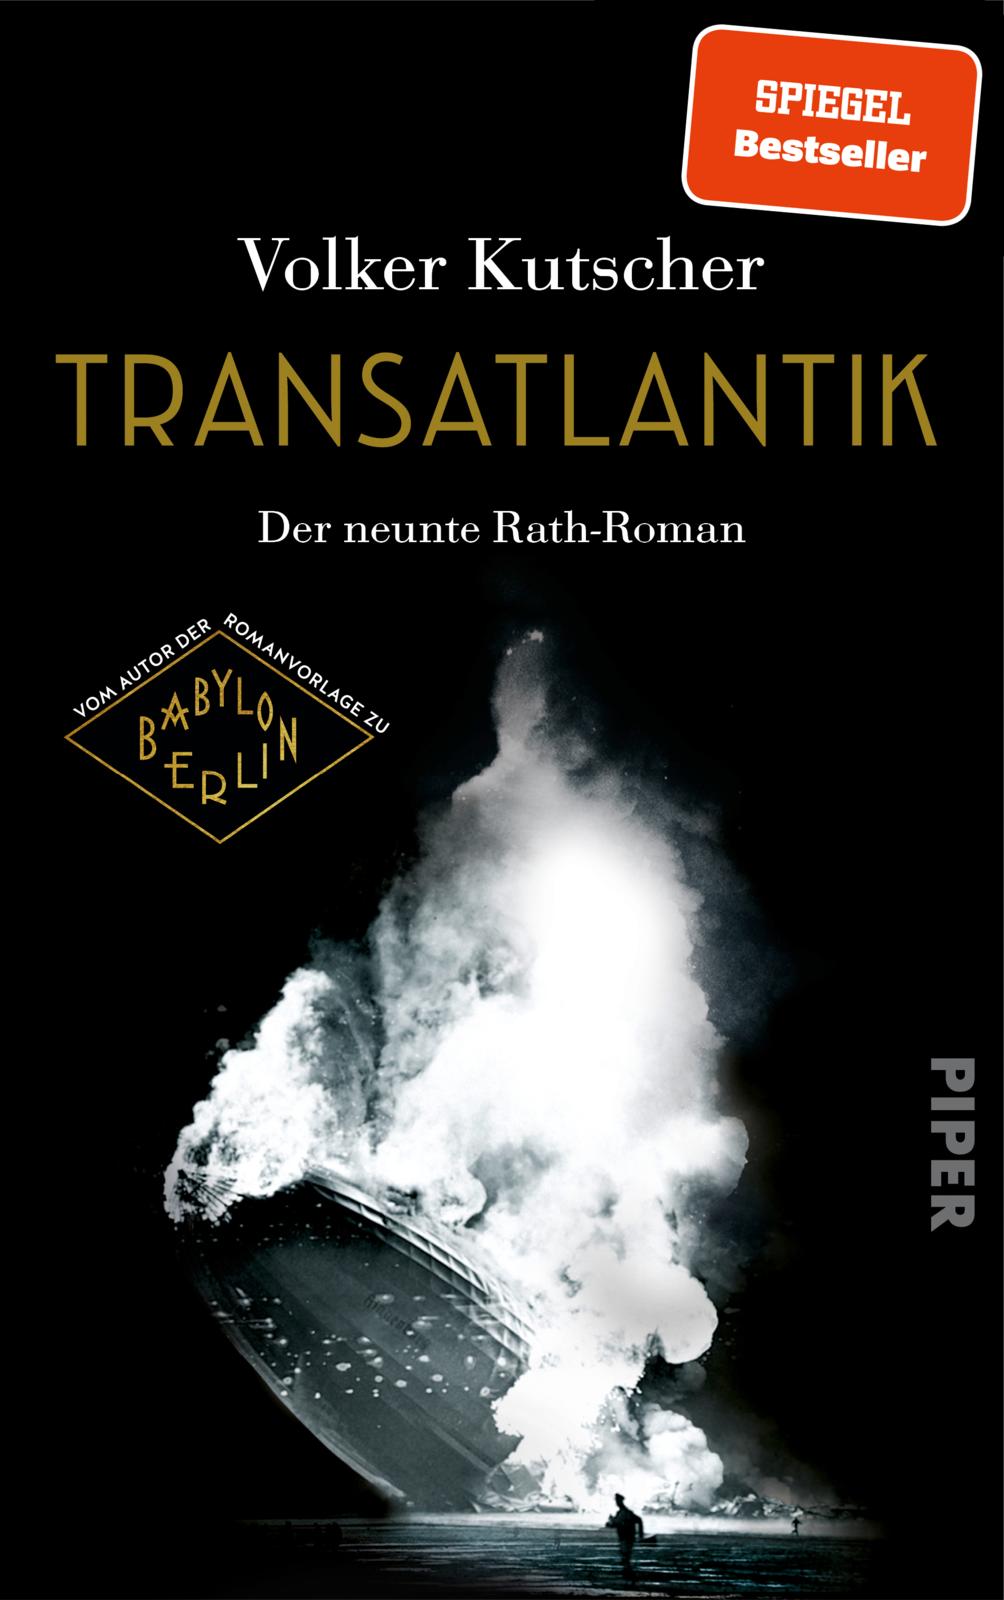 Transatlantik (EBook, German language)